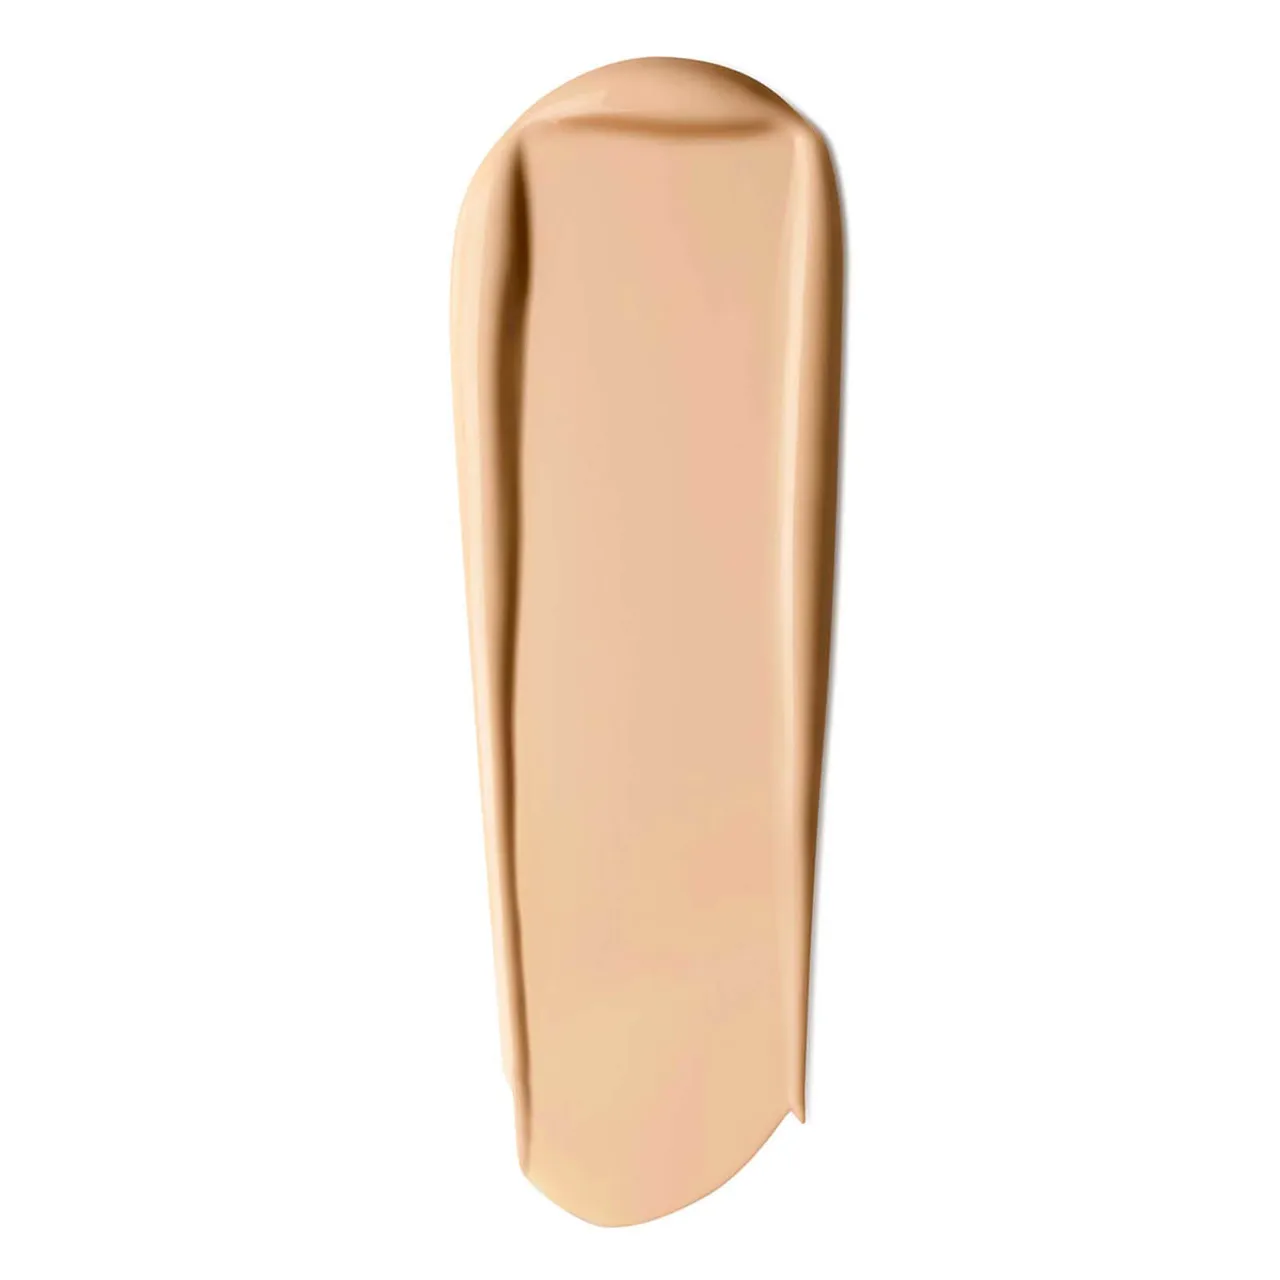 Guerlain Parure Gold Skin 24H No-Transfer High Perfection Foundation 35ml (Various Shades) - 3N Neutral / Neutre